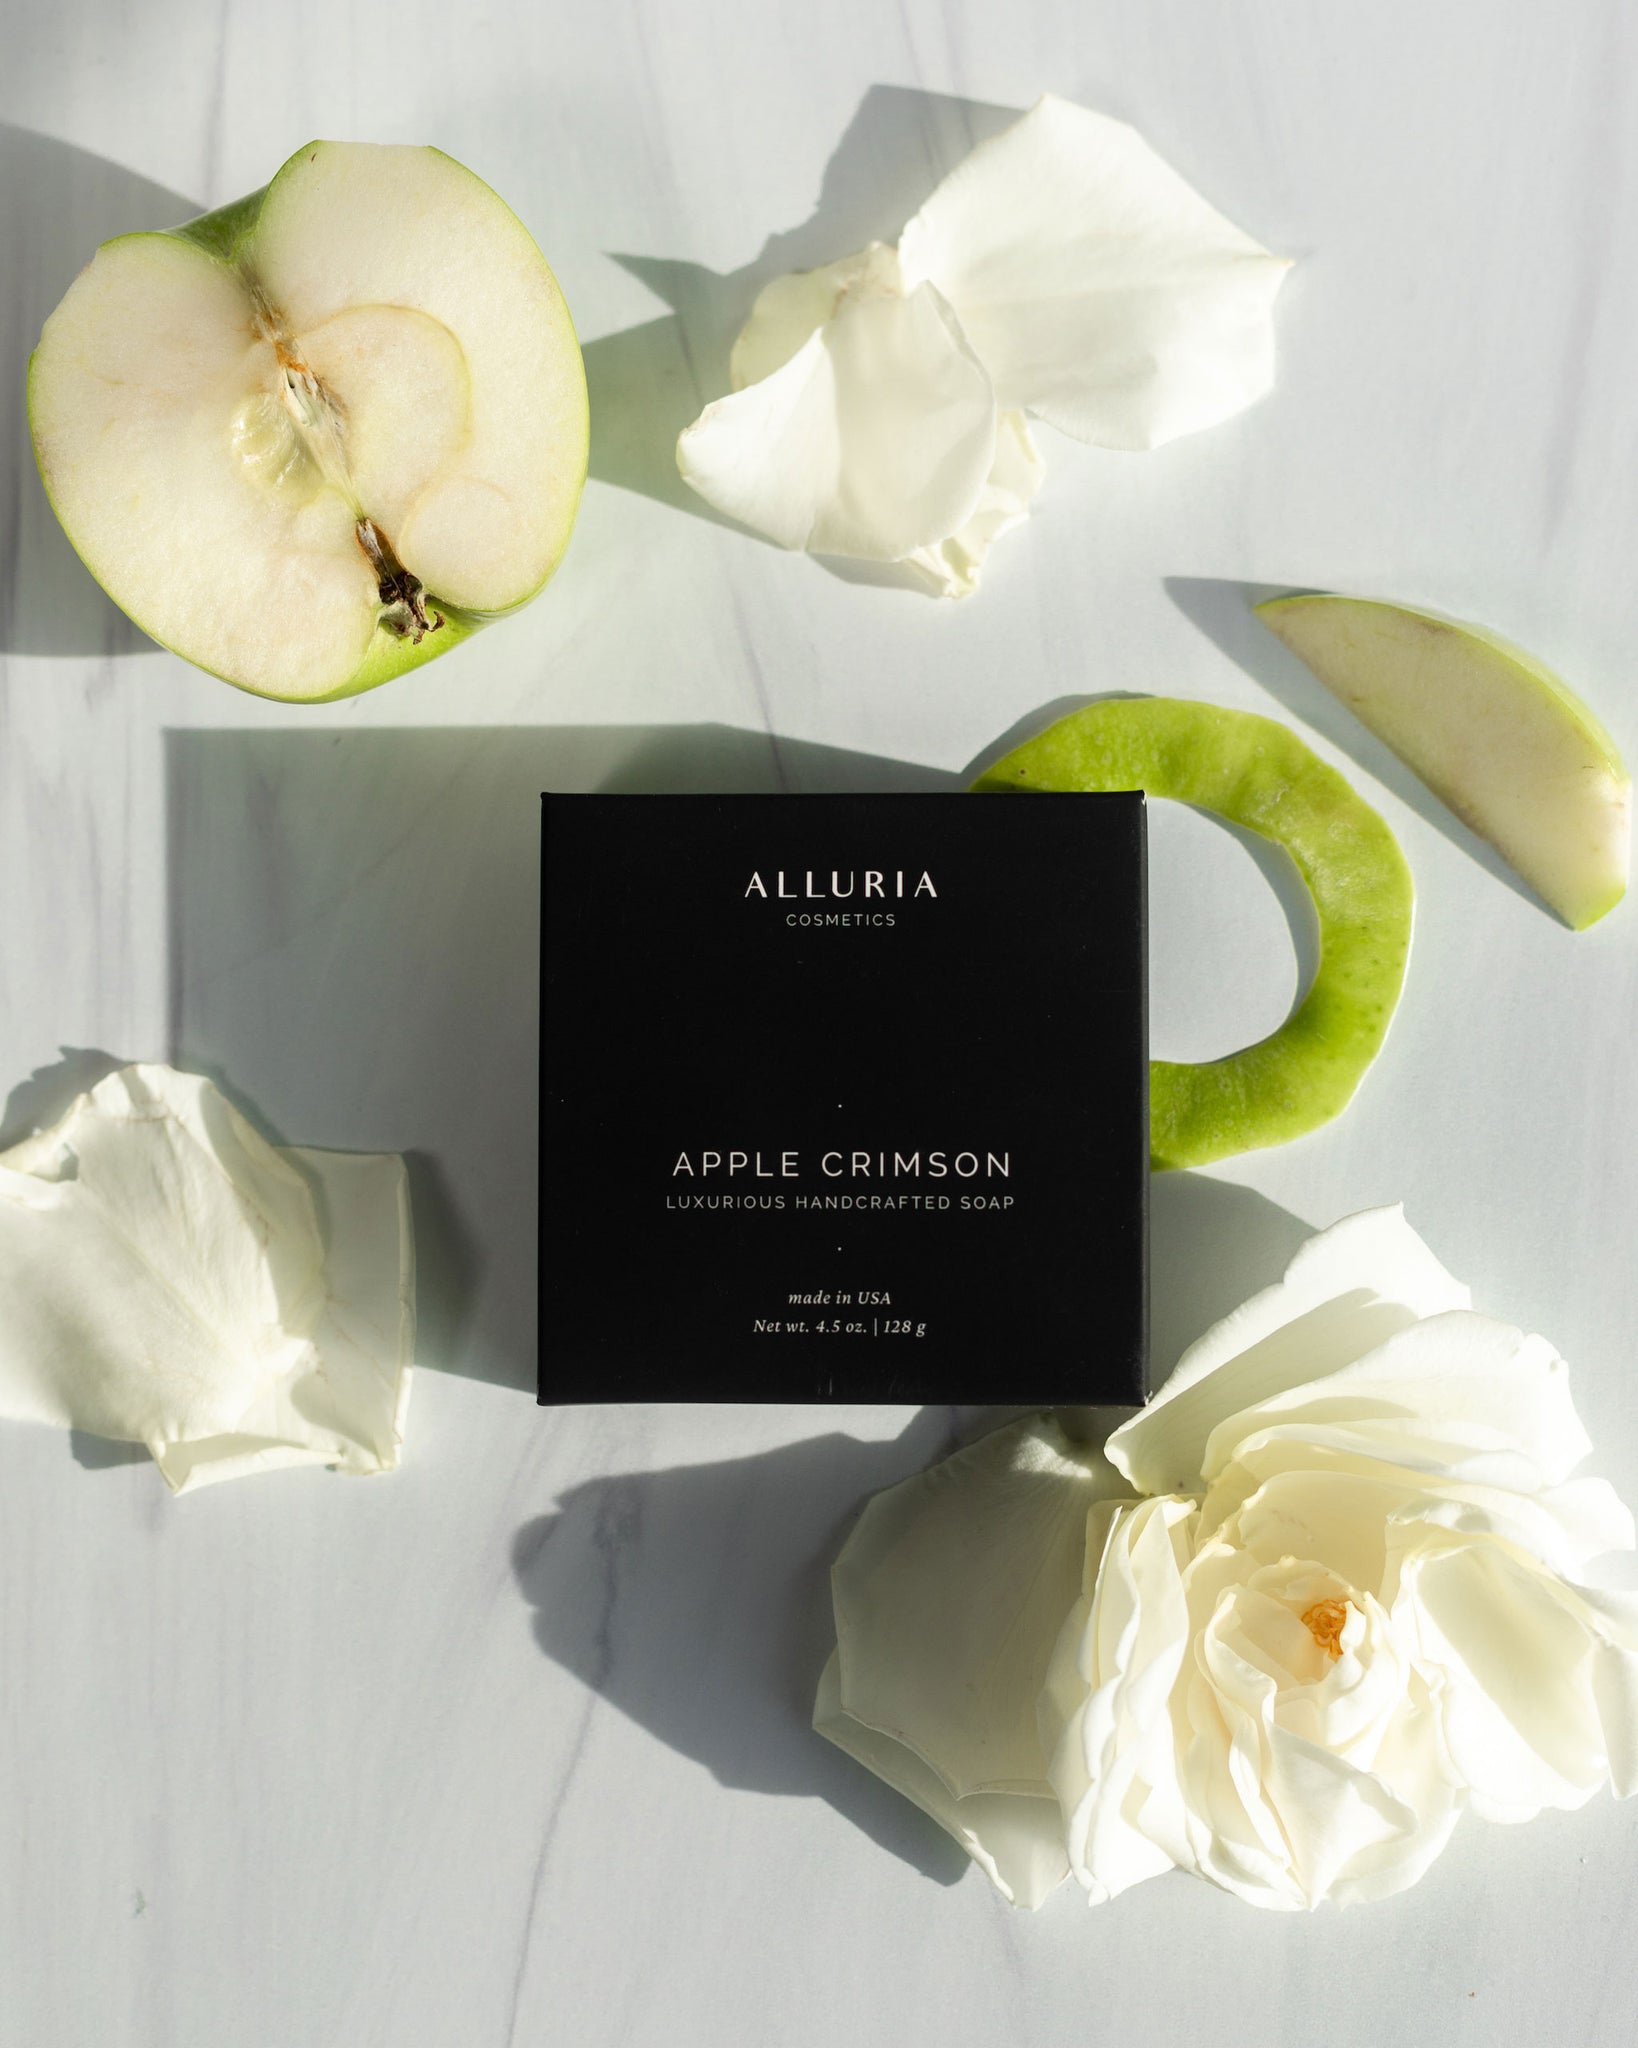 Karolina Król Studio minimalist packaging design for a natural soap brand